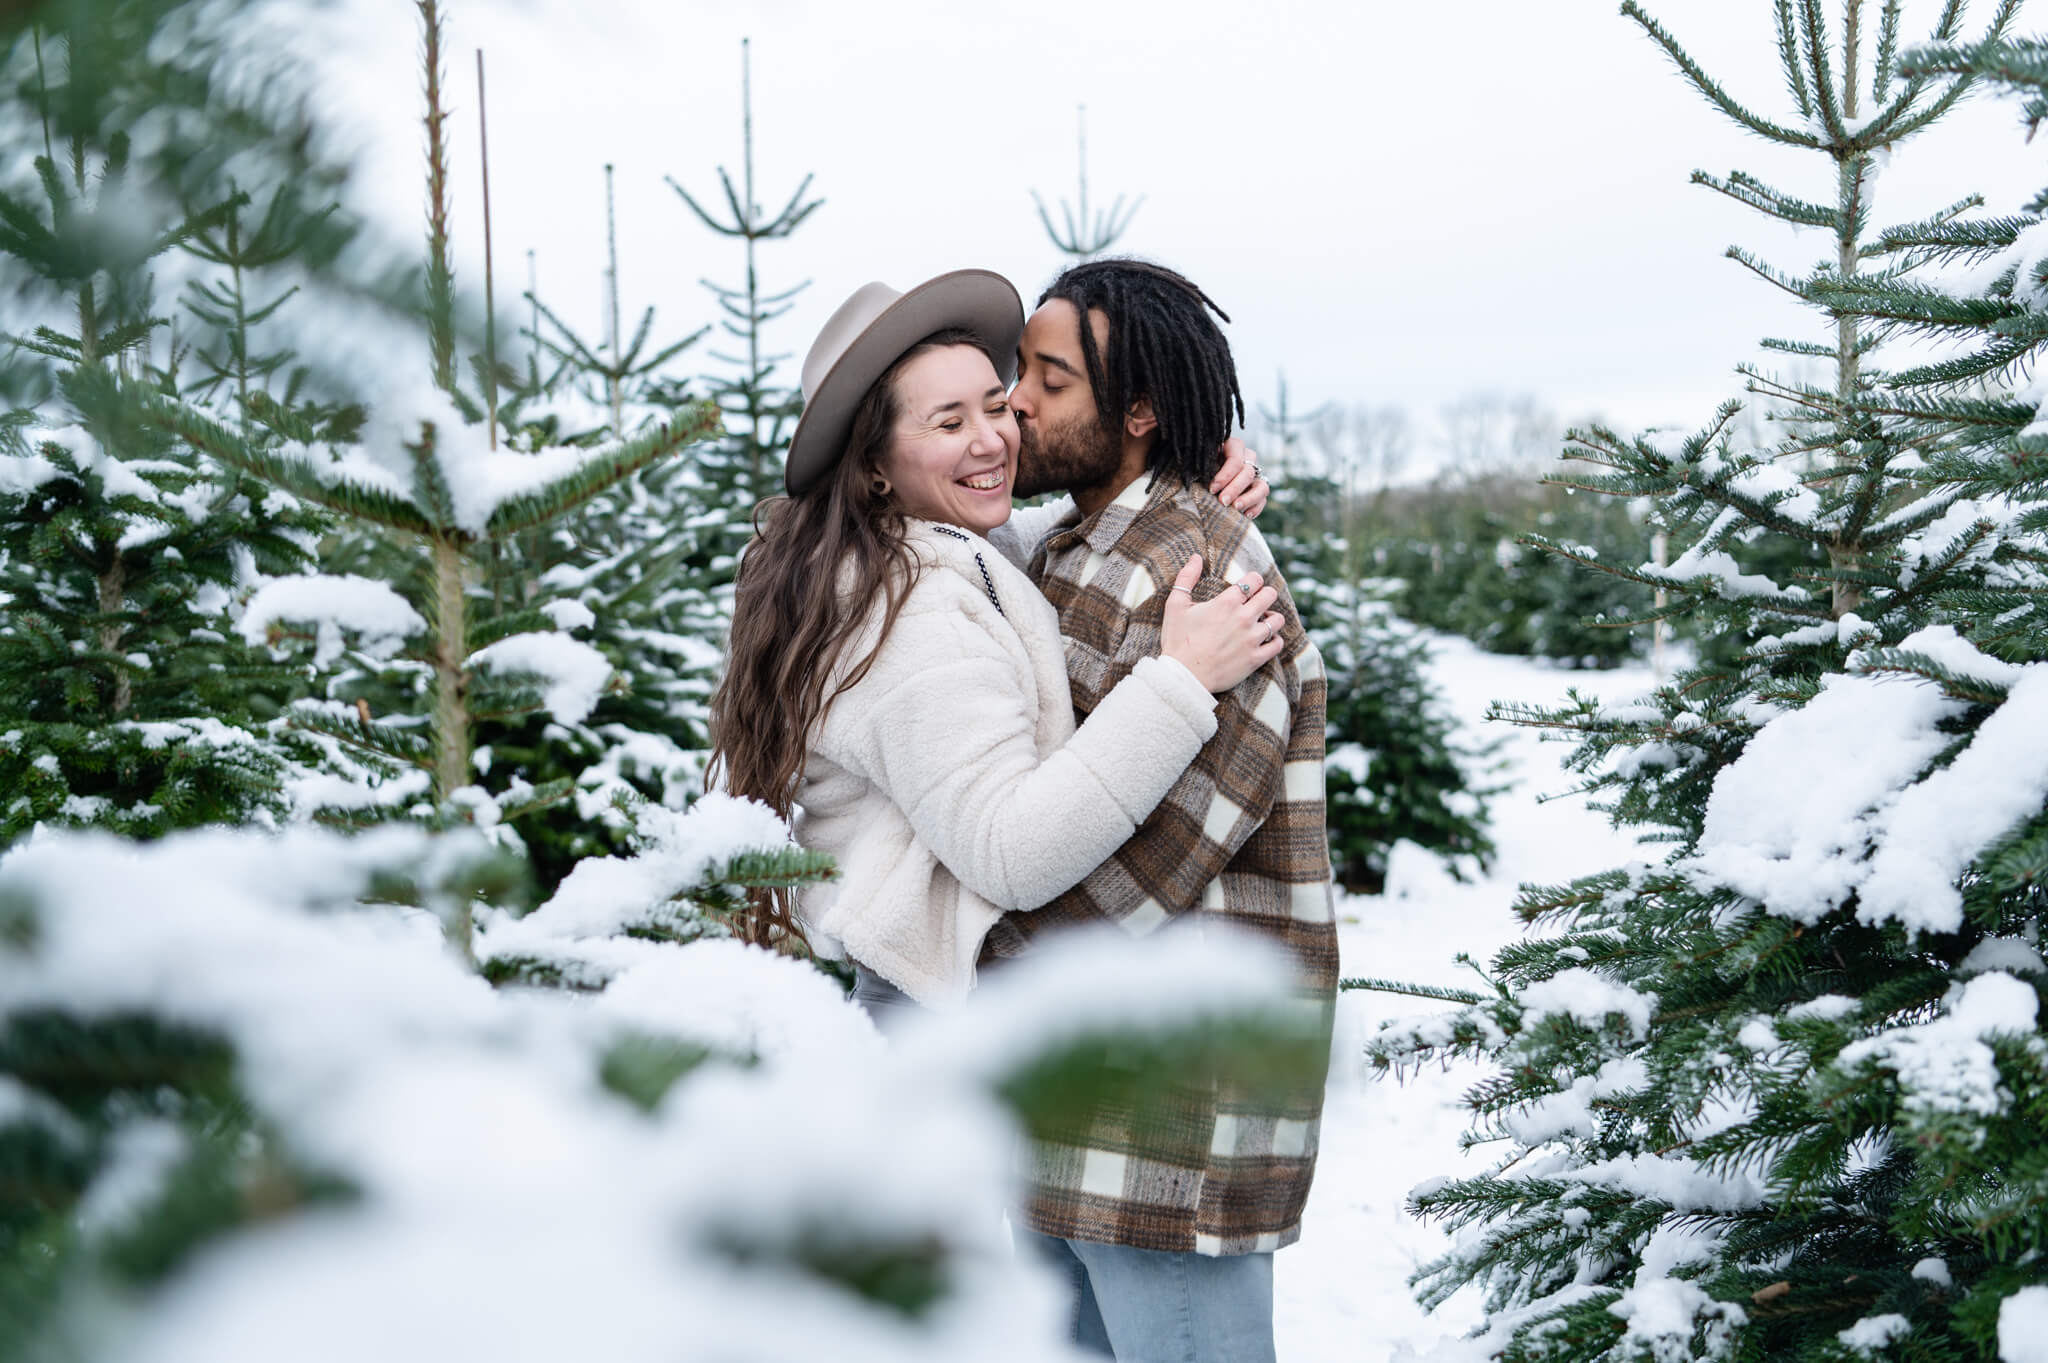 Chloe Bolam - Warwickshire Buckinghamshire Shropshire Couple, Engagement and Wedding Photographer - Fun winter snow couple photoshoot at a Christmas Tree Farm